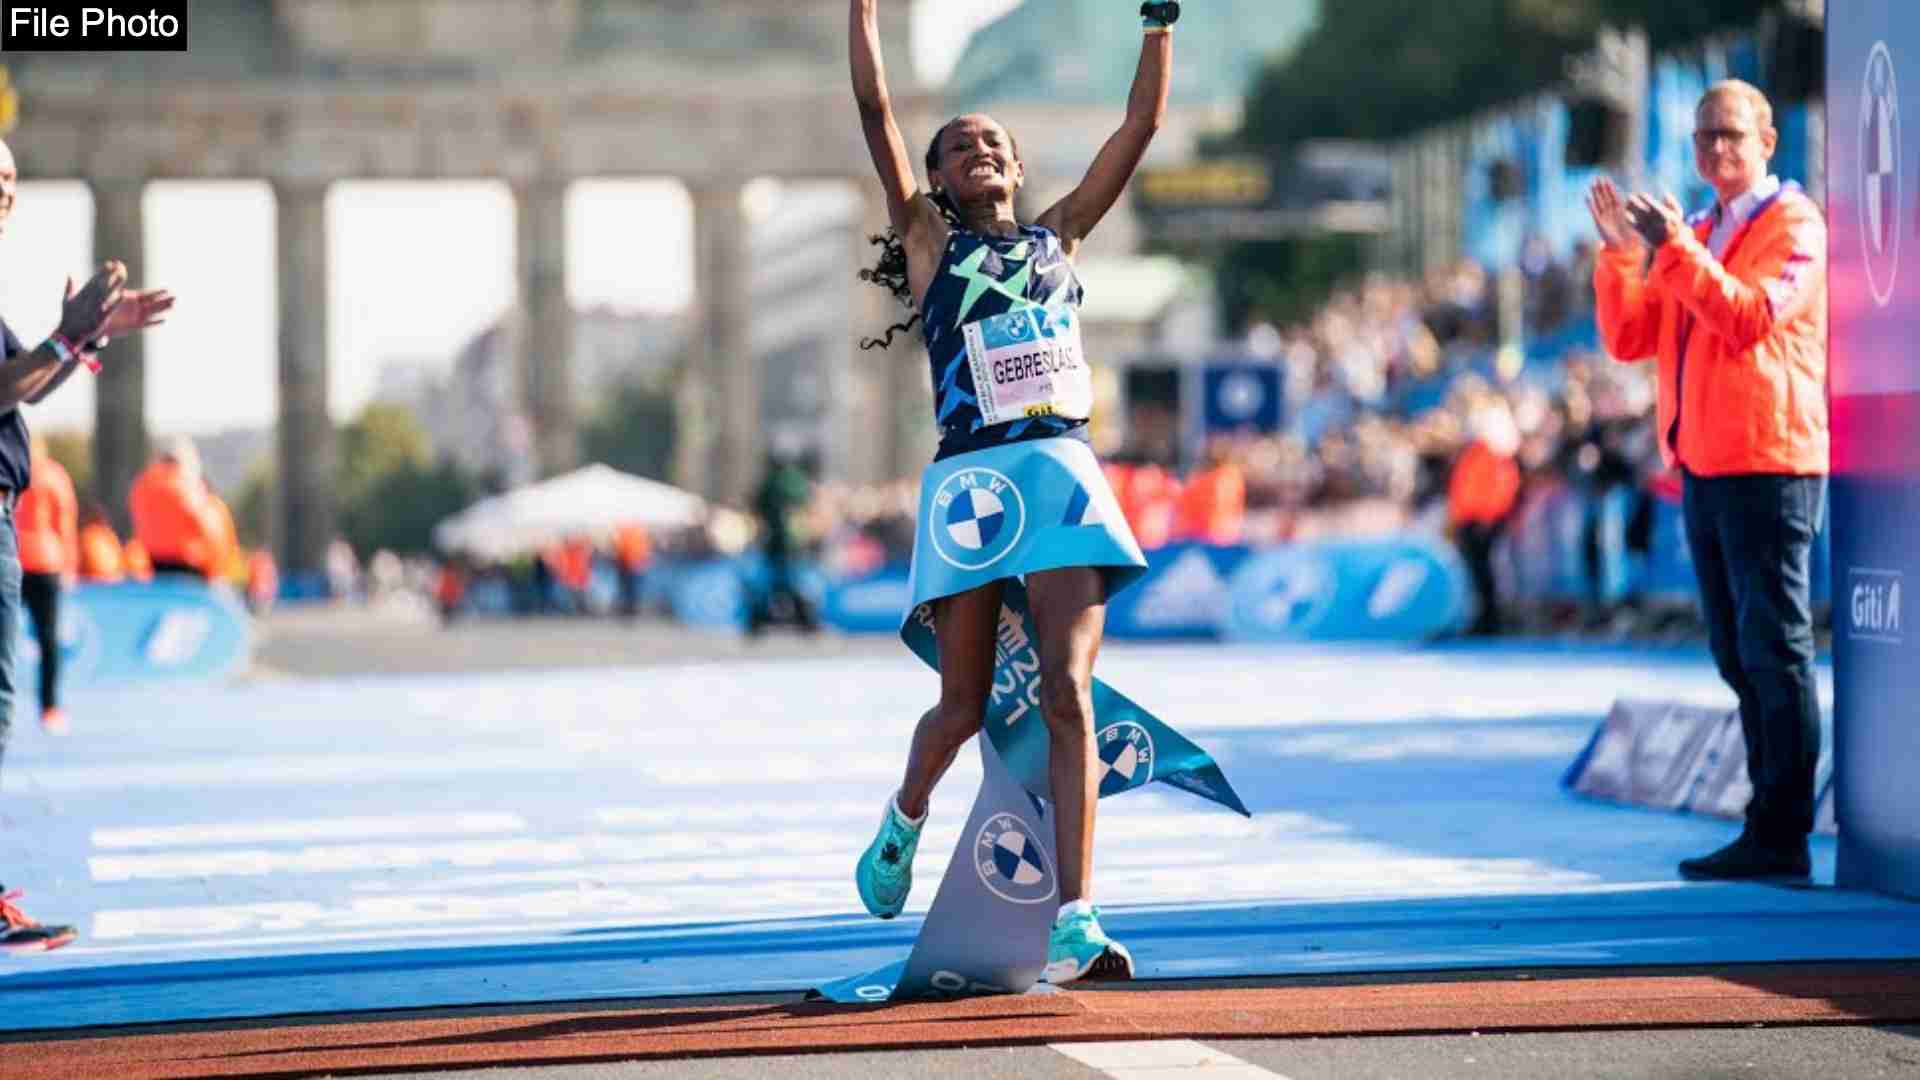 Berlin Marathon 2021 results: Adola wins, Bekele finished third